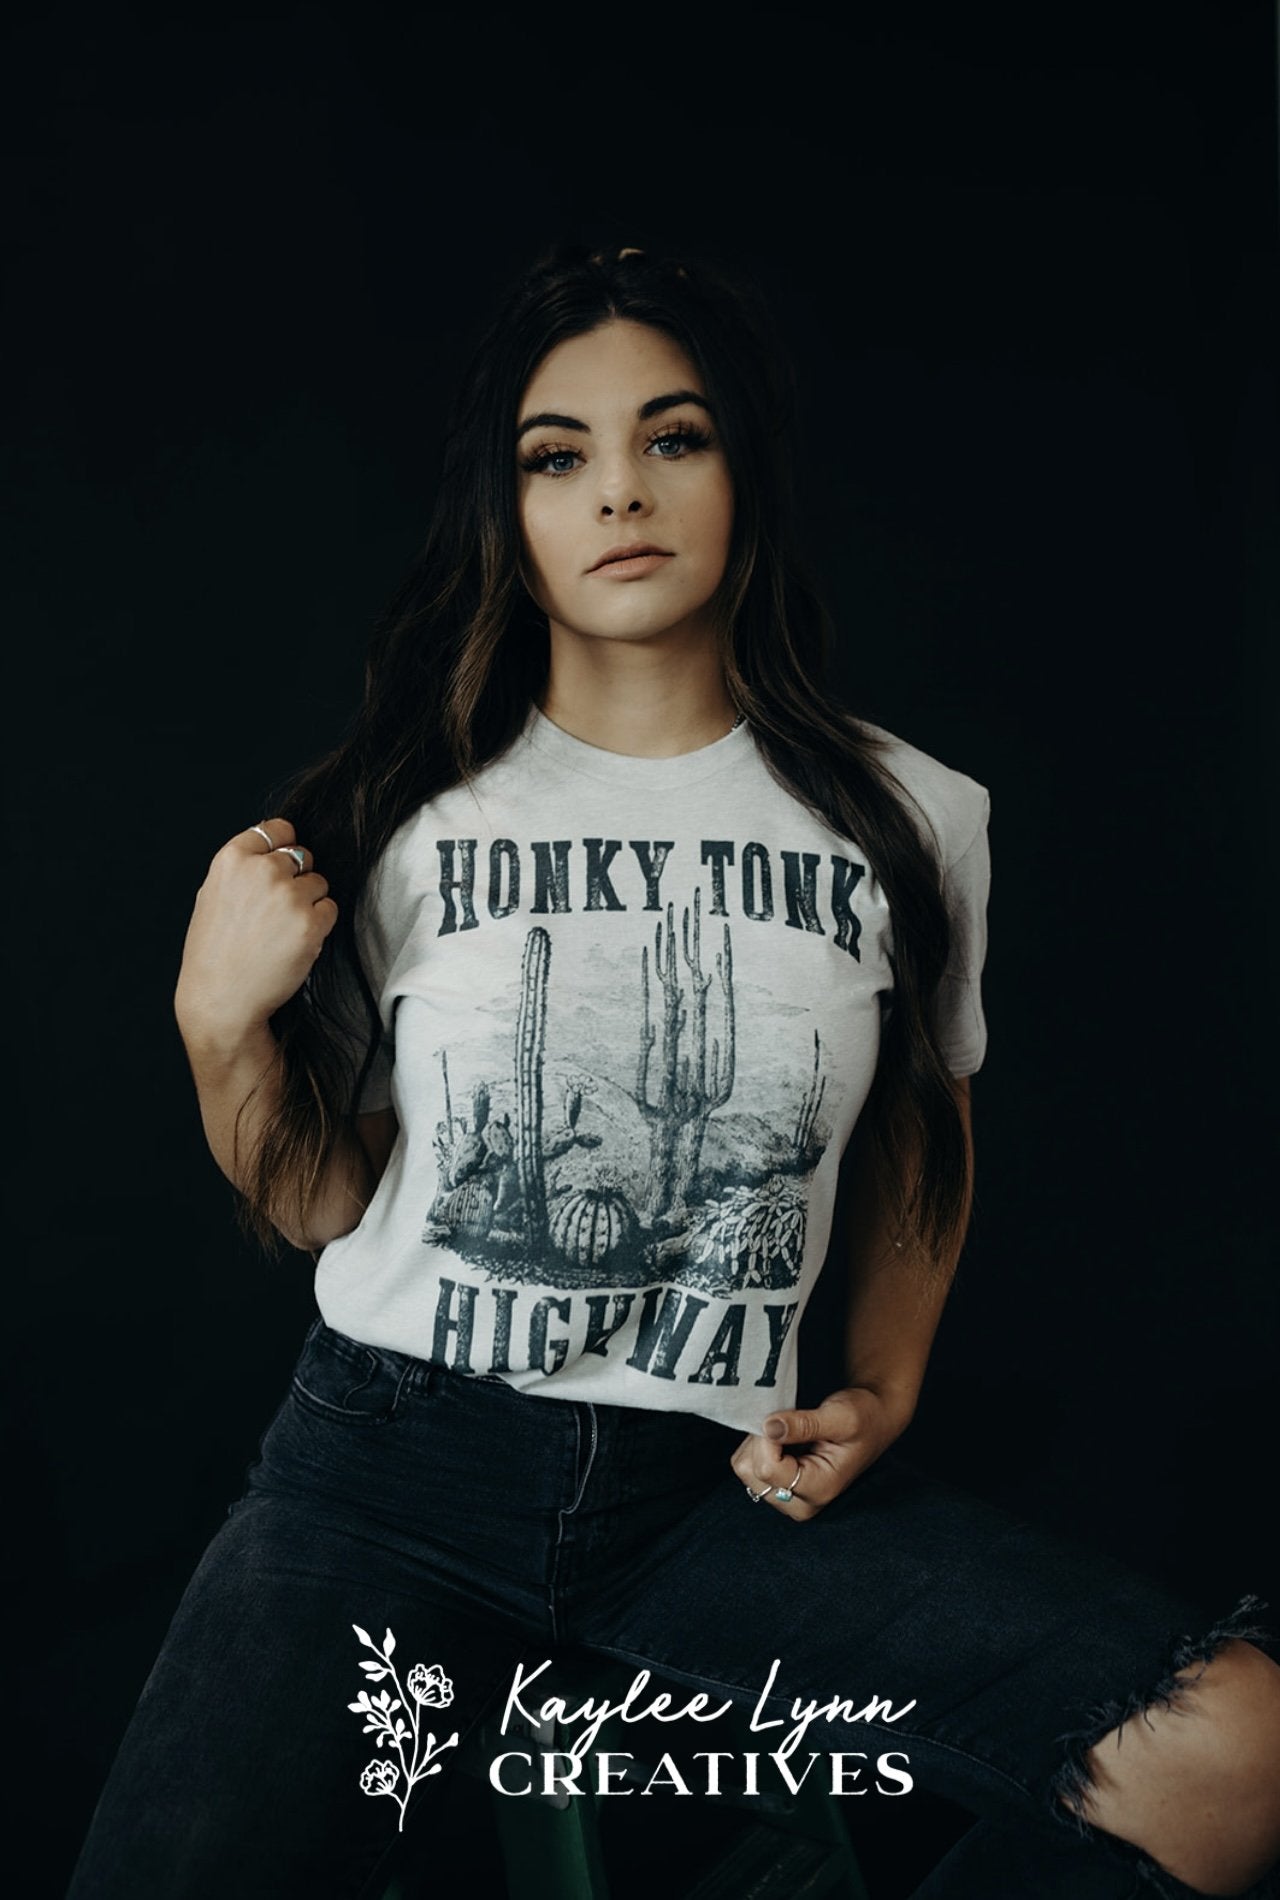 Honky Tonk Highway